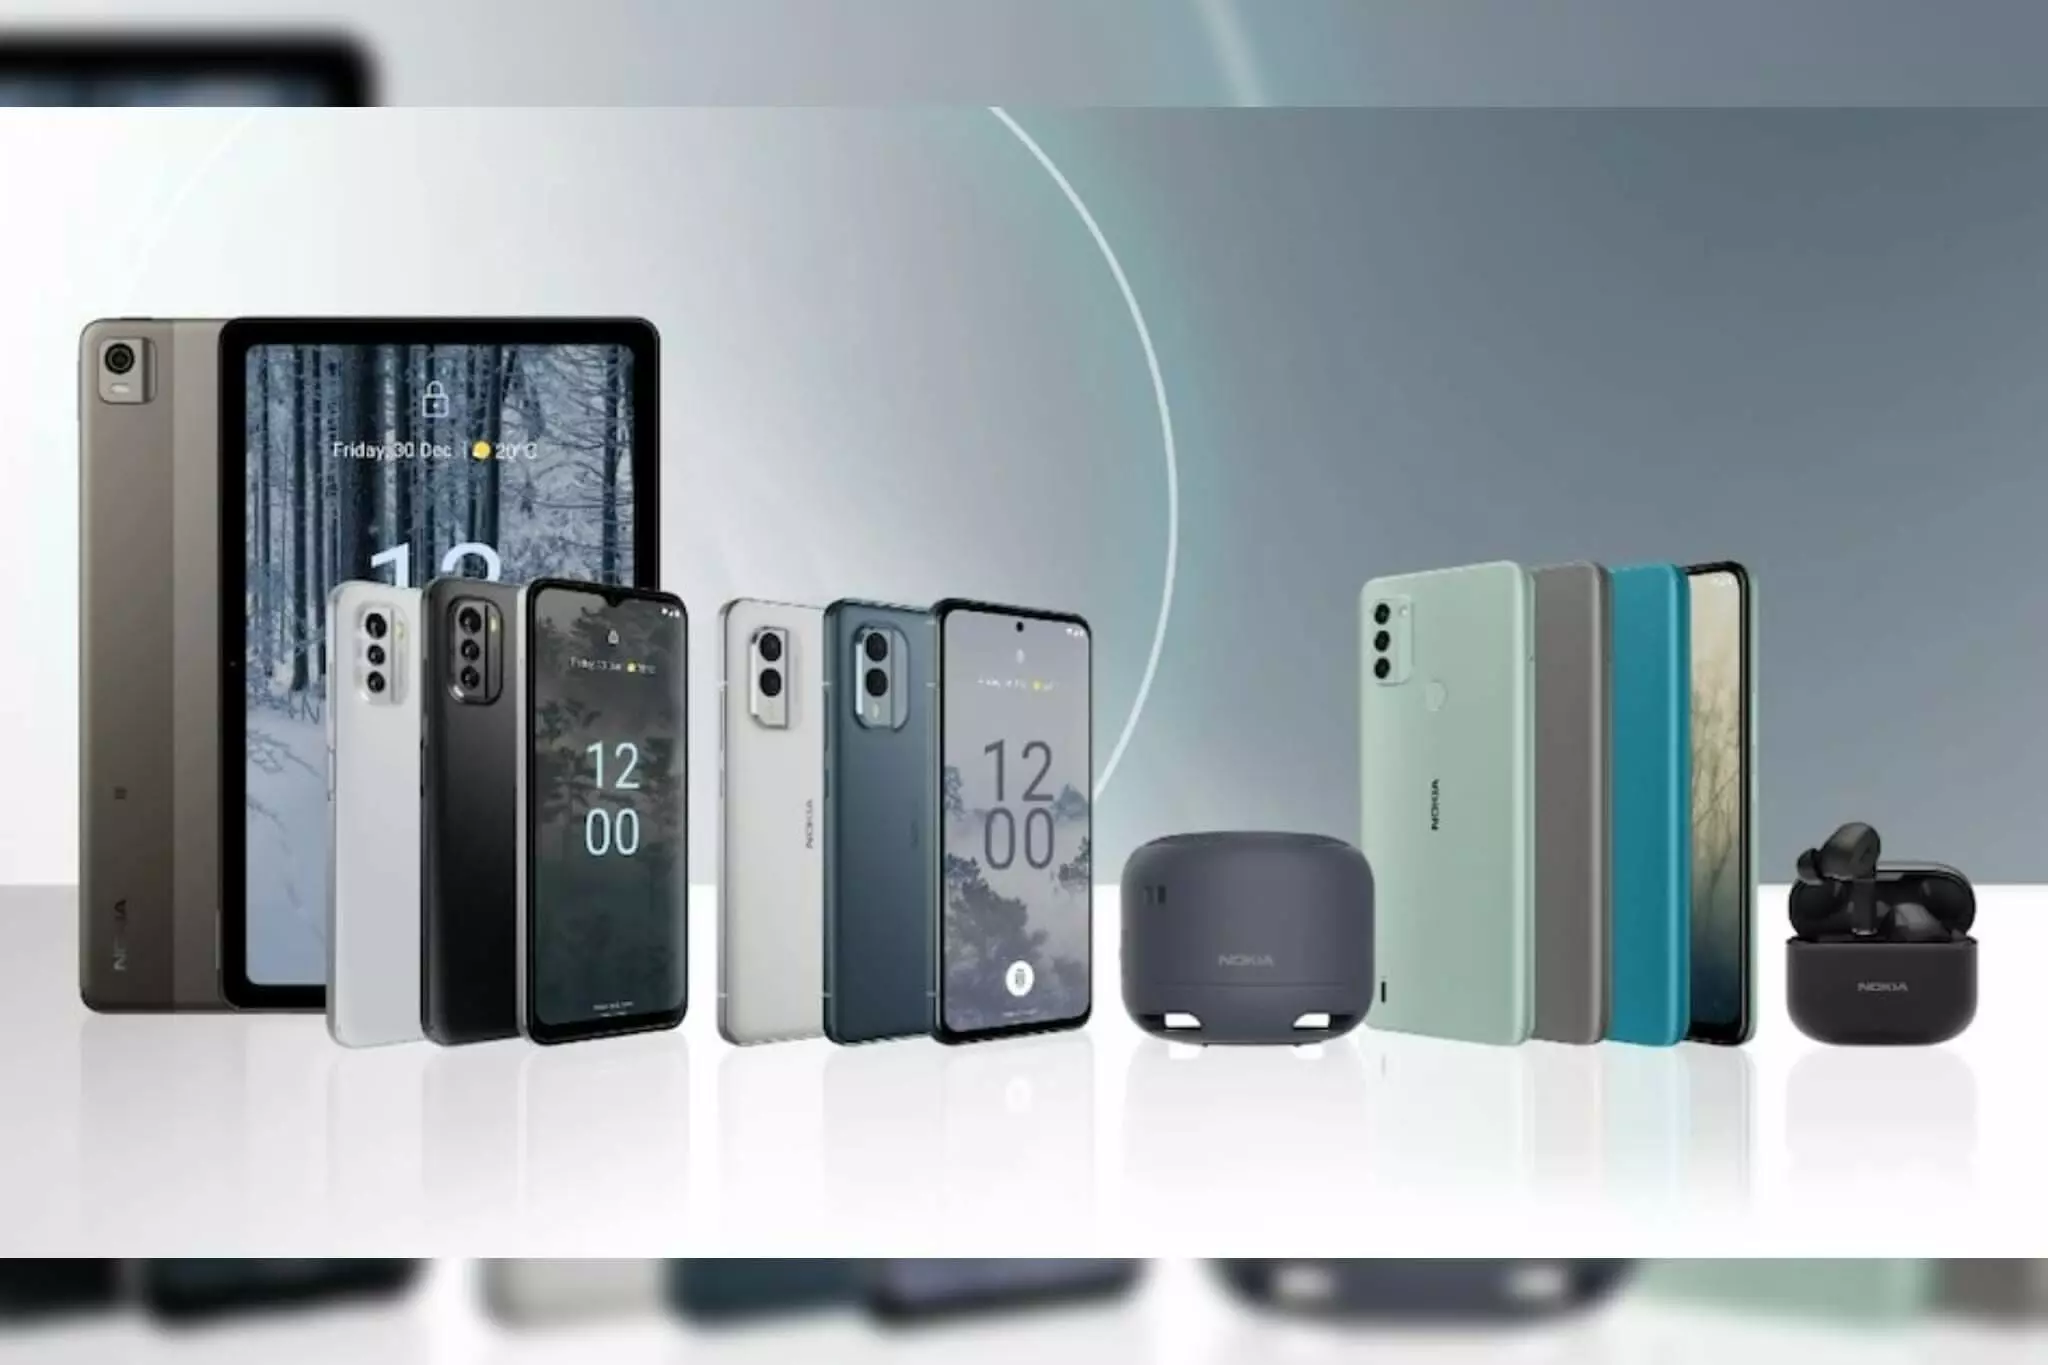 Nokia Smartphone and Device